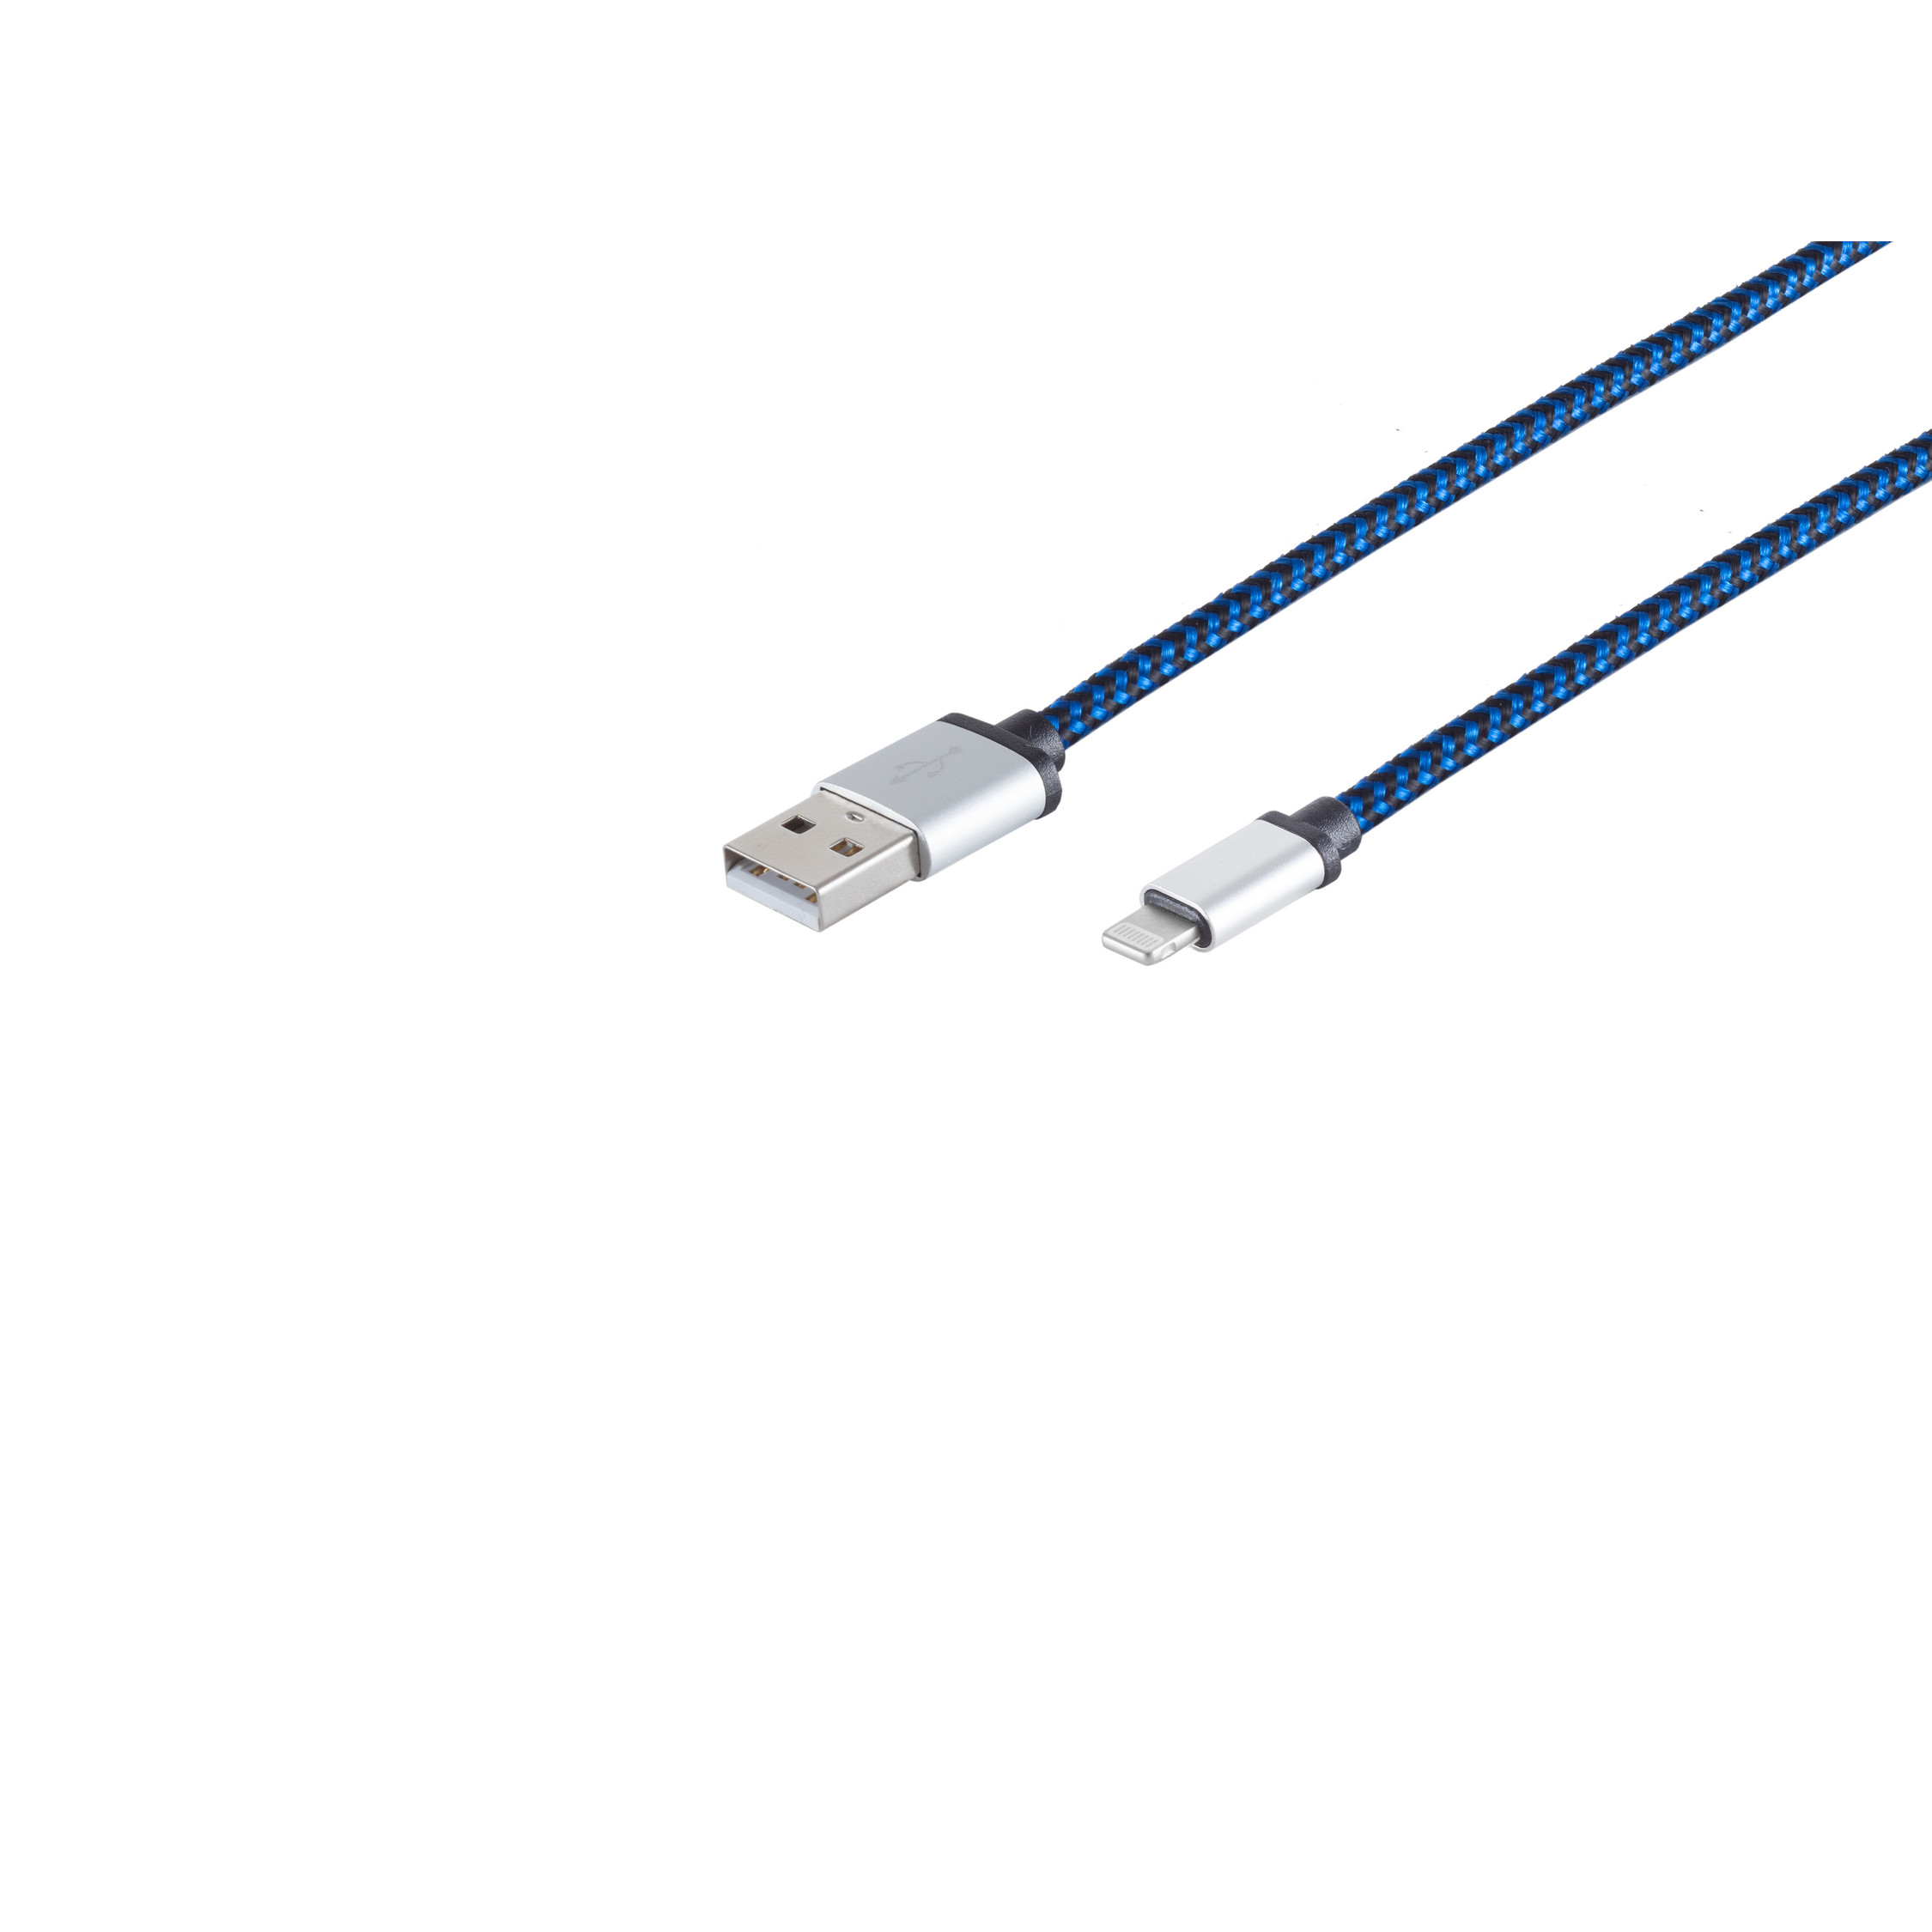 S/CONN MAXIMUM Kabel A 0,9m Stecker Stecker USB USB-Ladekabel auf 8-pin CONNECTIVITY